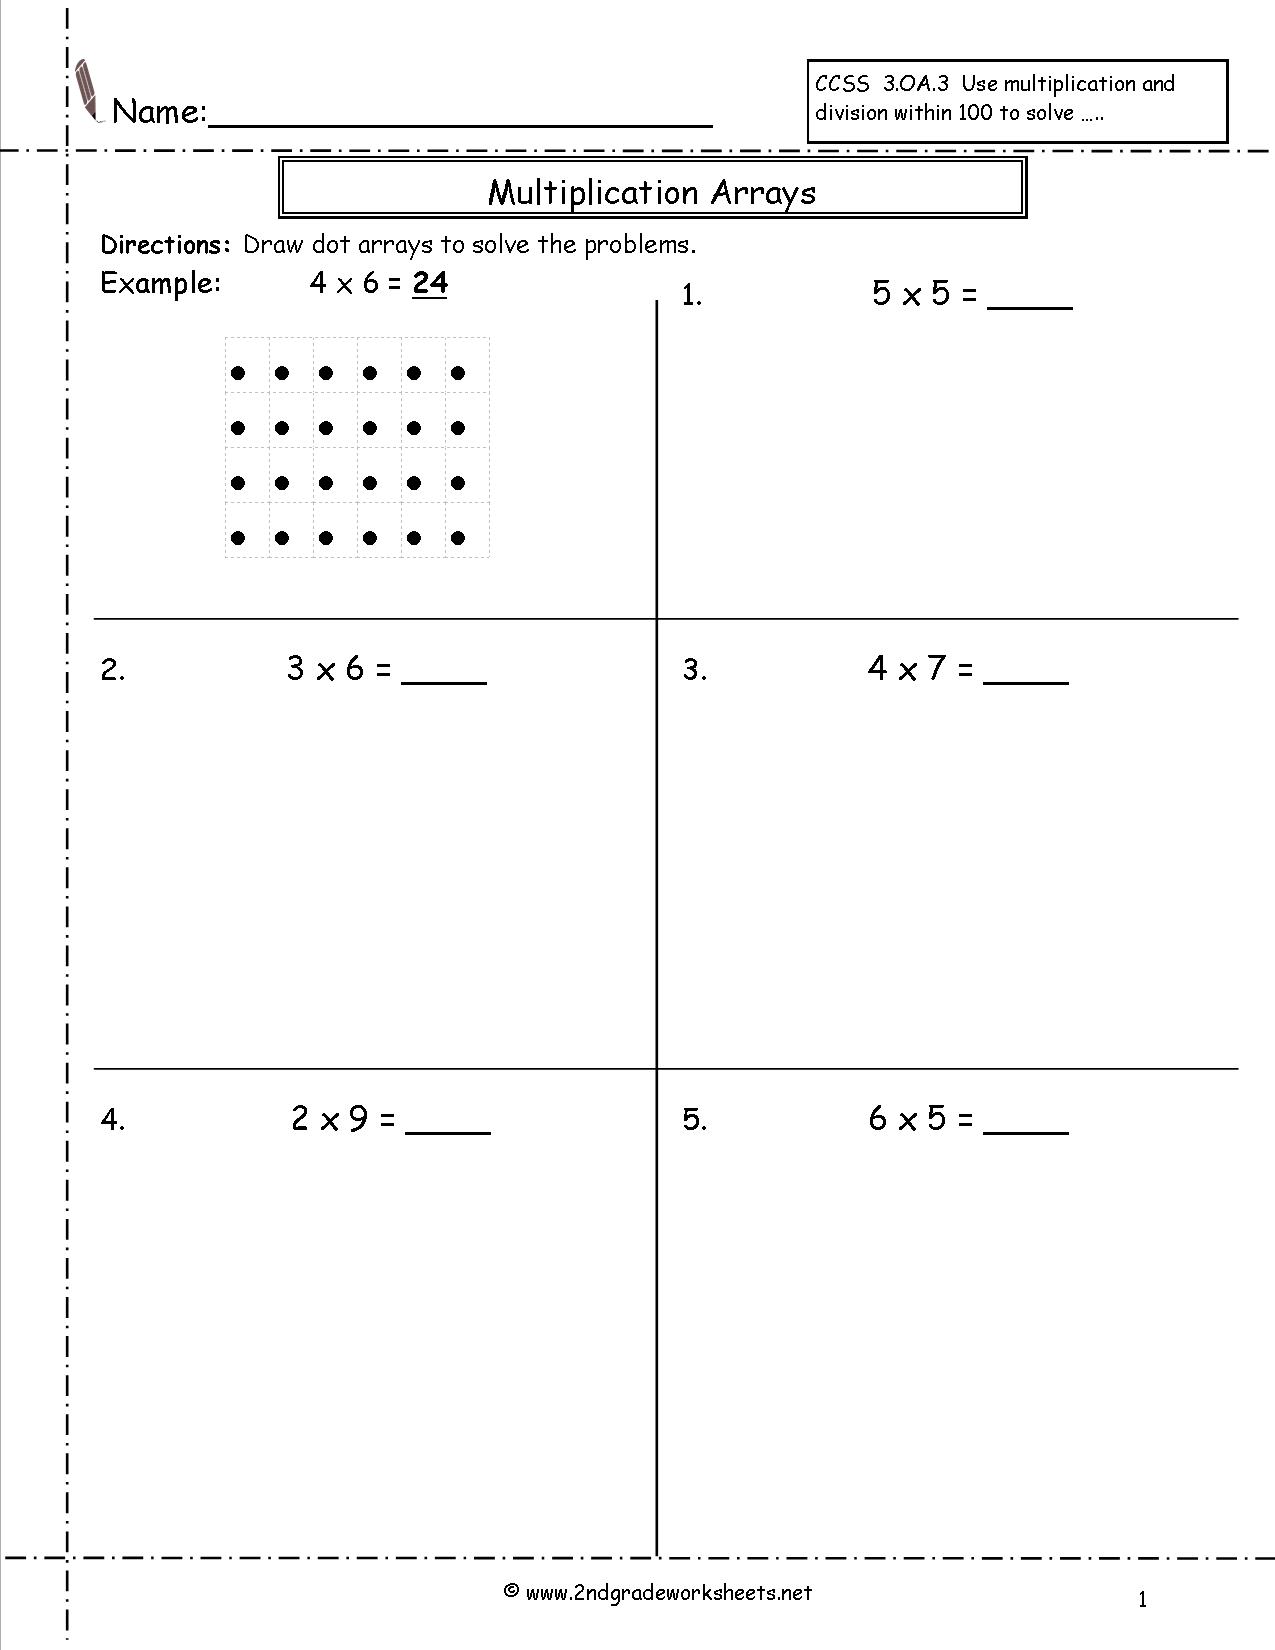 15 Best Images Of Division As Arrays Worksheet Array Multiplication Worksheet Division Using 